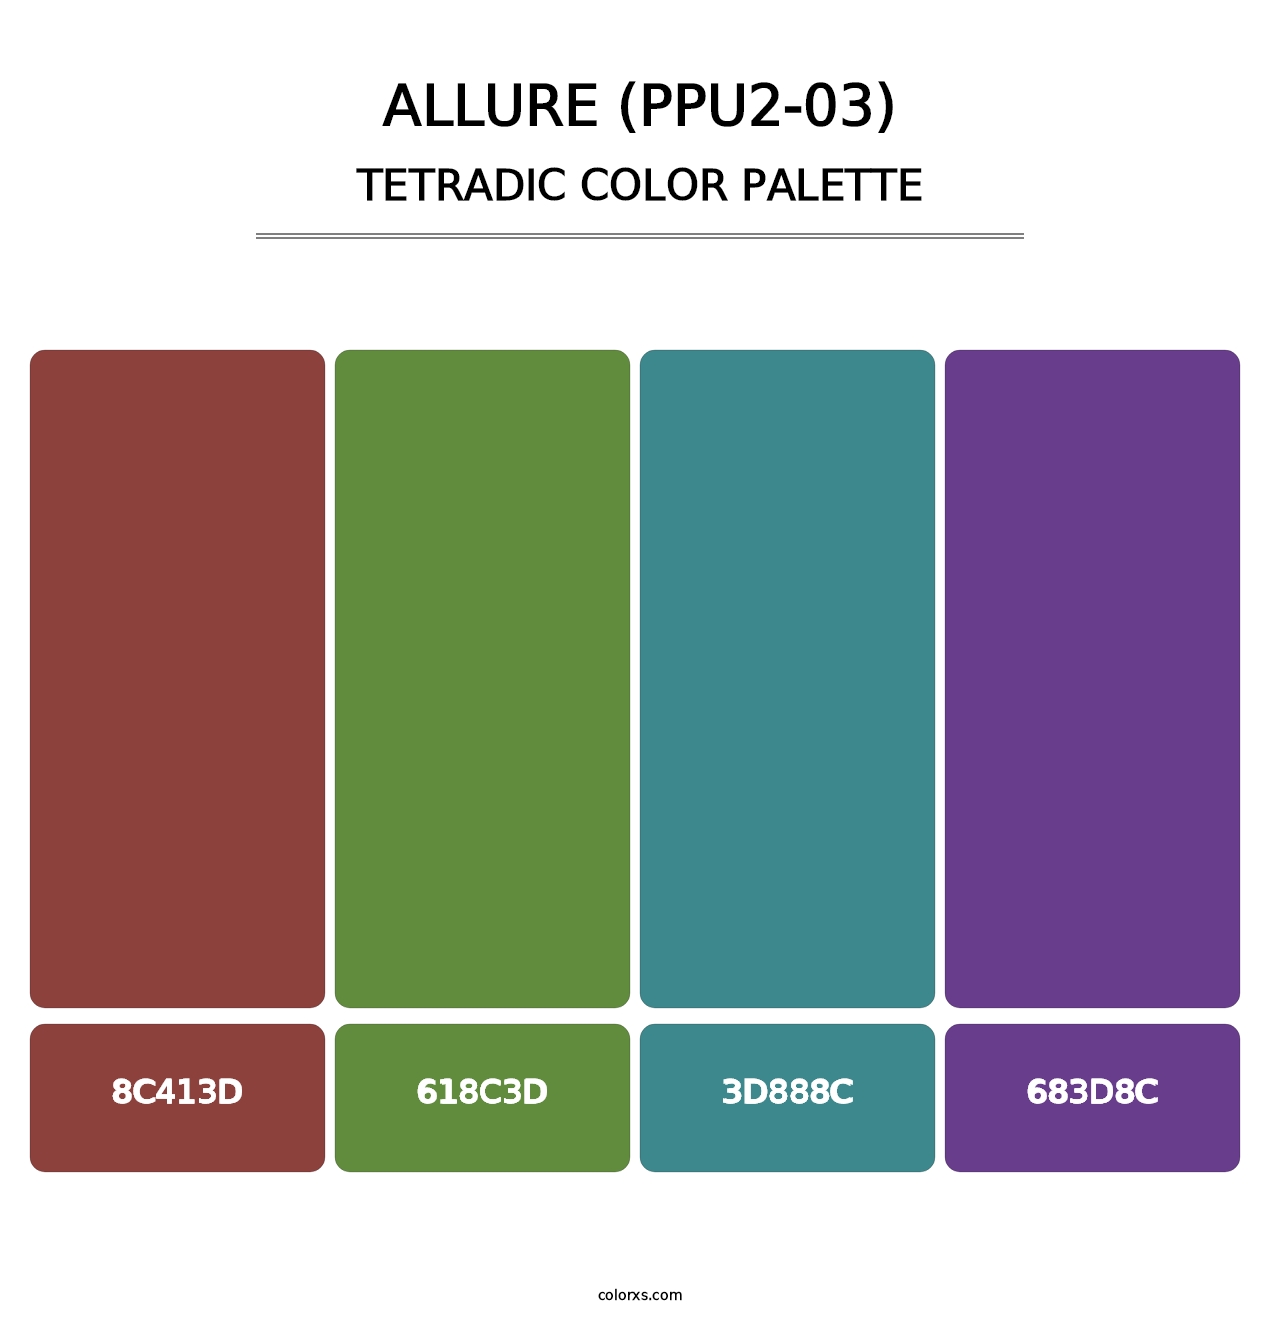 Allure (PPU2-03) - Tetradic Color Palette